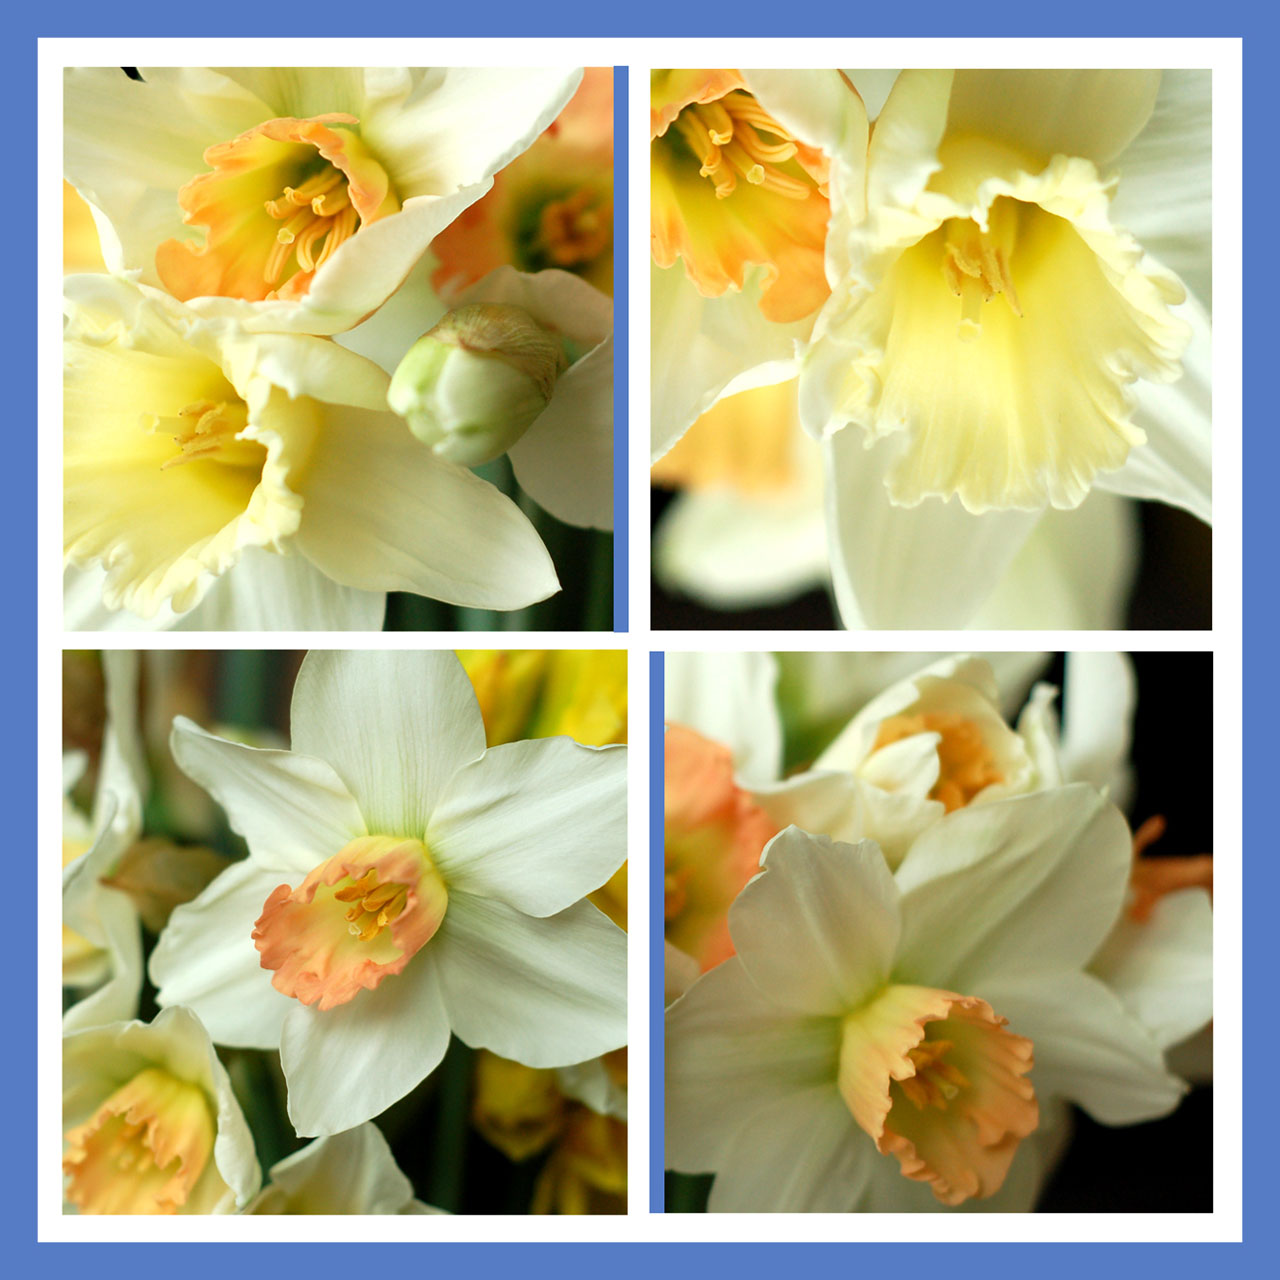 Daffodils - Details